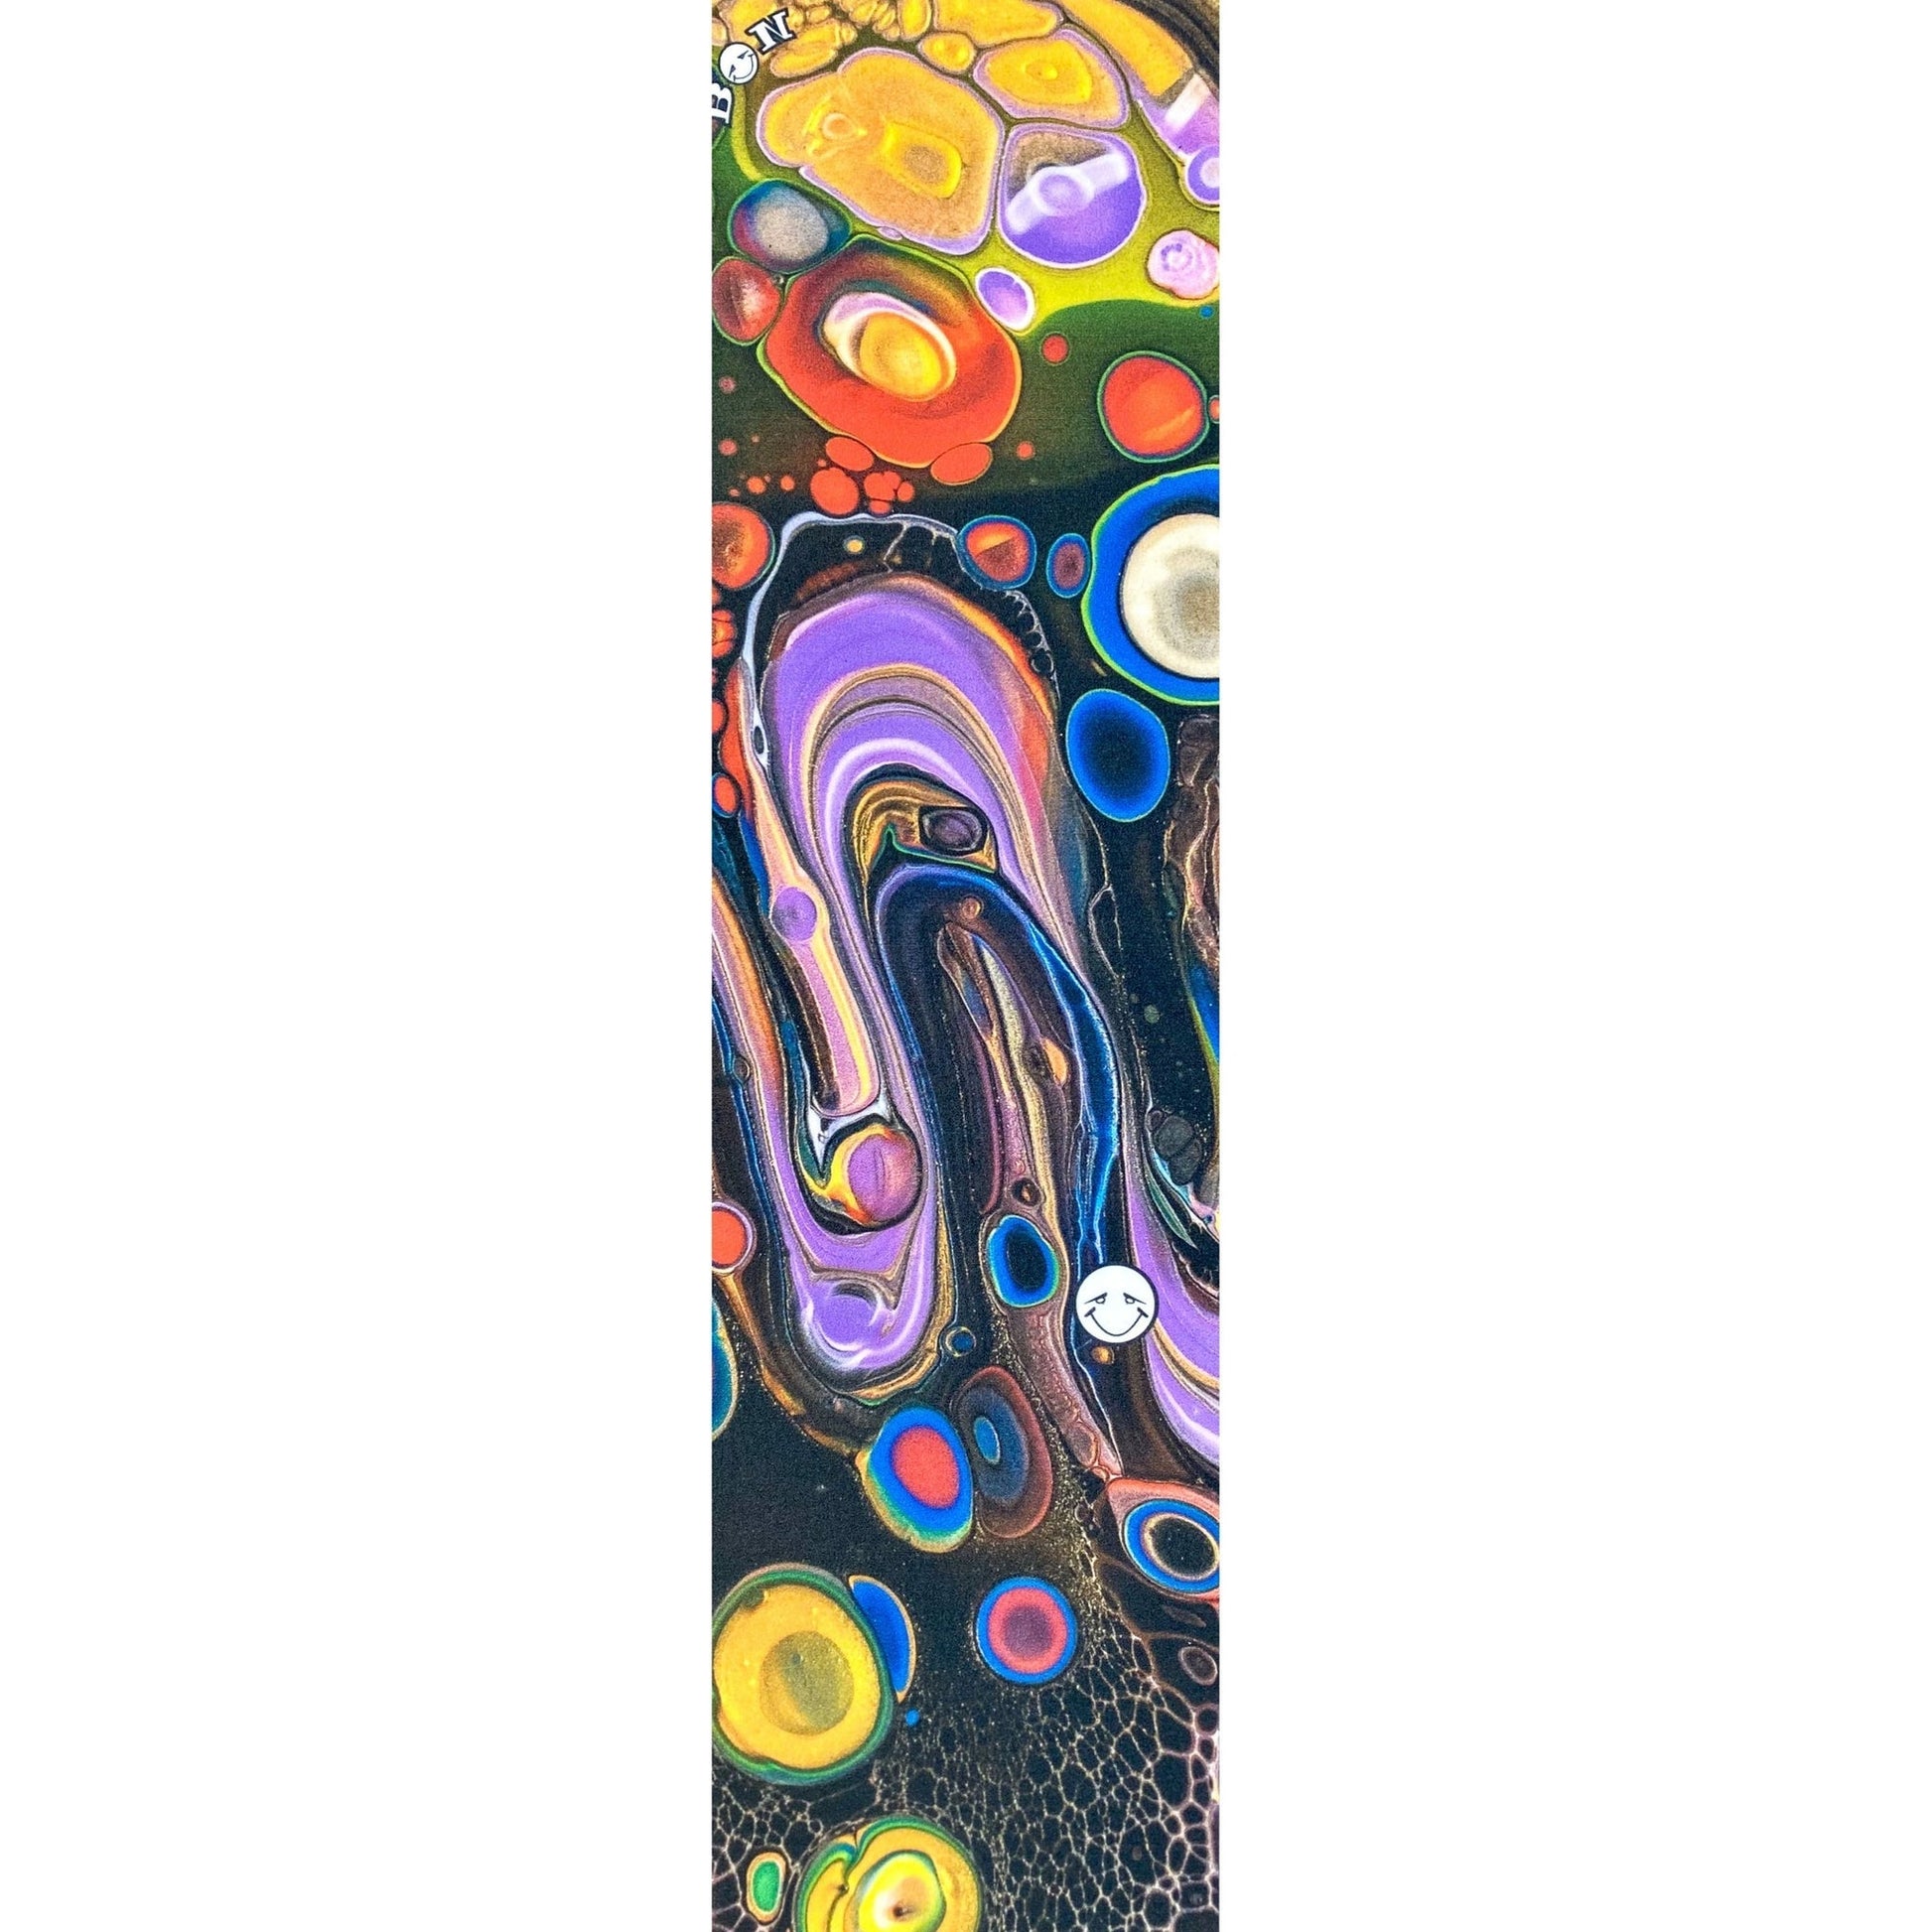 Bon Grip Laffy Taffy Standard Skateboard Deck 9" x 33" PRemium grit grip tape